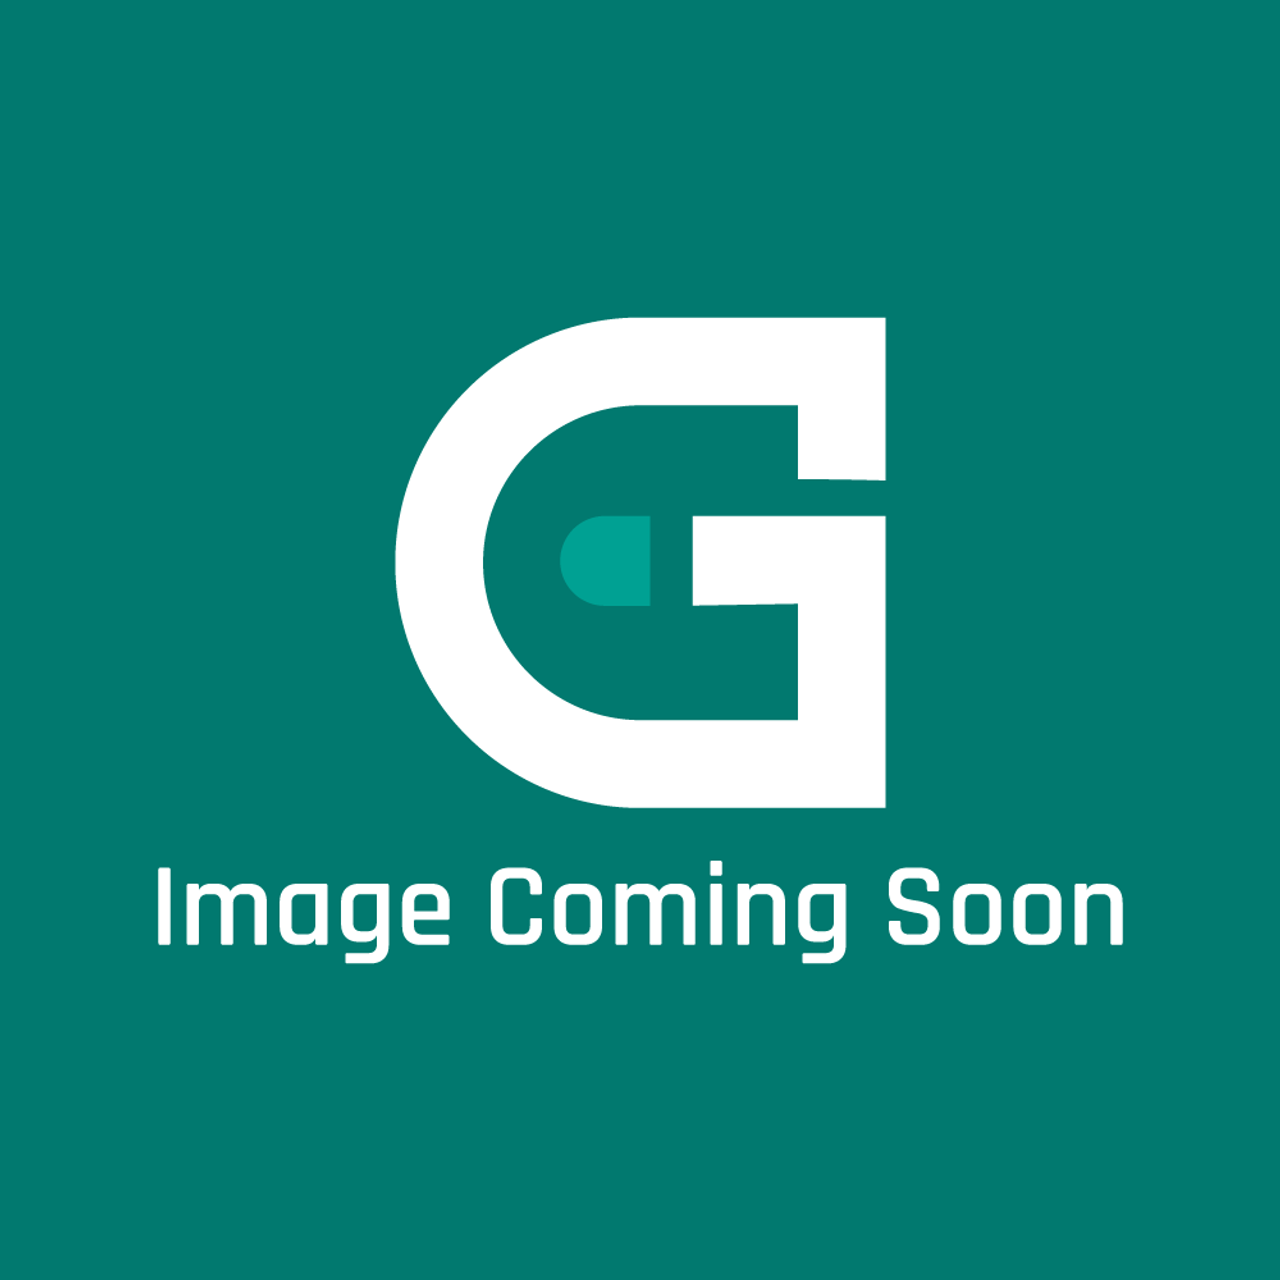 Garland 94040003 - 16In Ntc Heatsink Temp.S Ensor - Image Coming Soon!